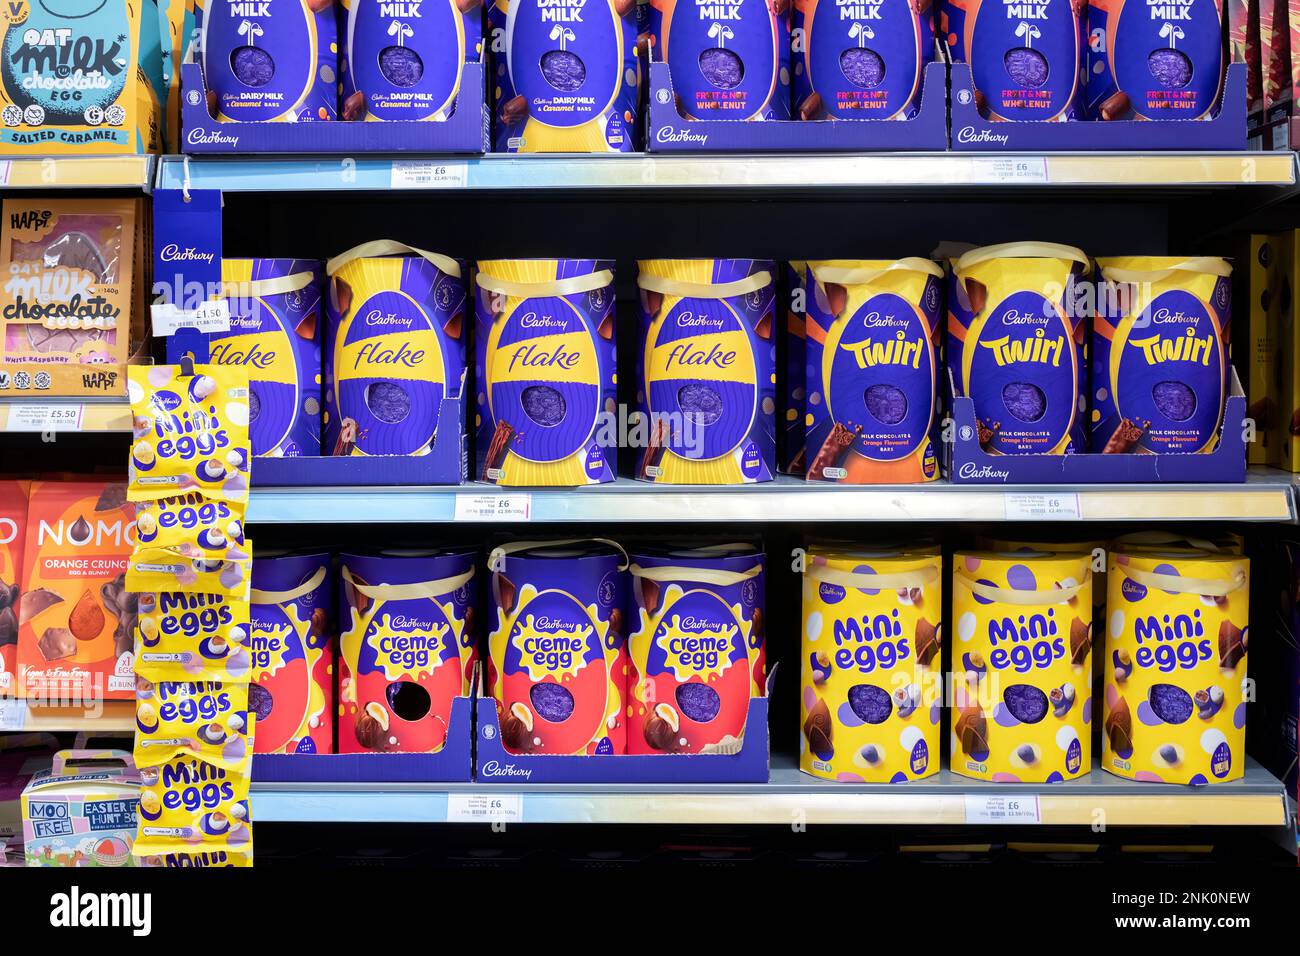 UK supermarket shelves filled with Cadbury Easter Eggs. The assortment includes Cadury Flake, Twirl Creme egg and mini Eggs Stock Photo